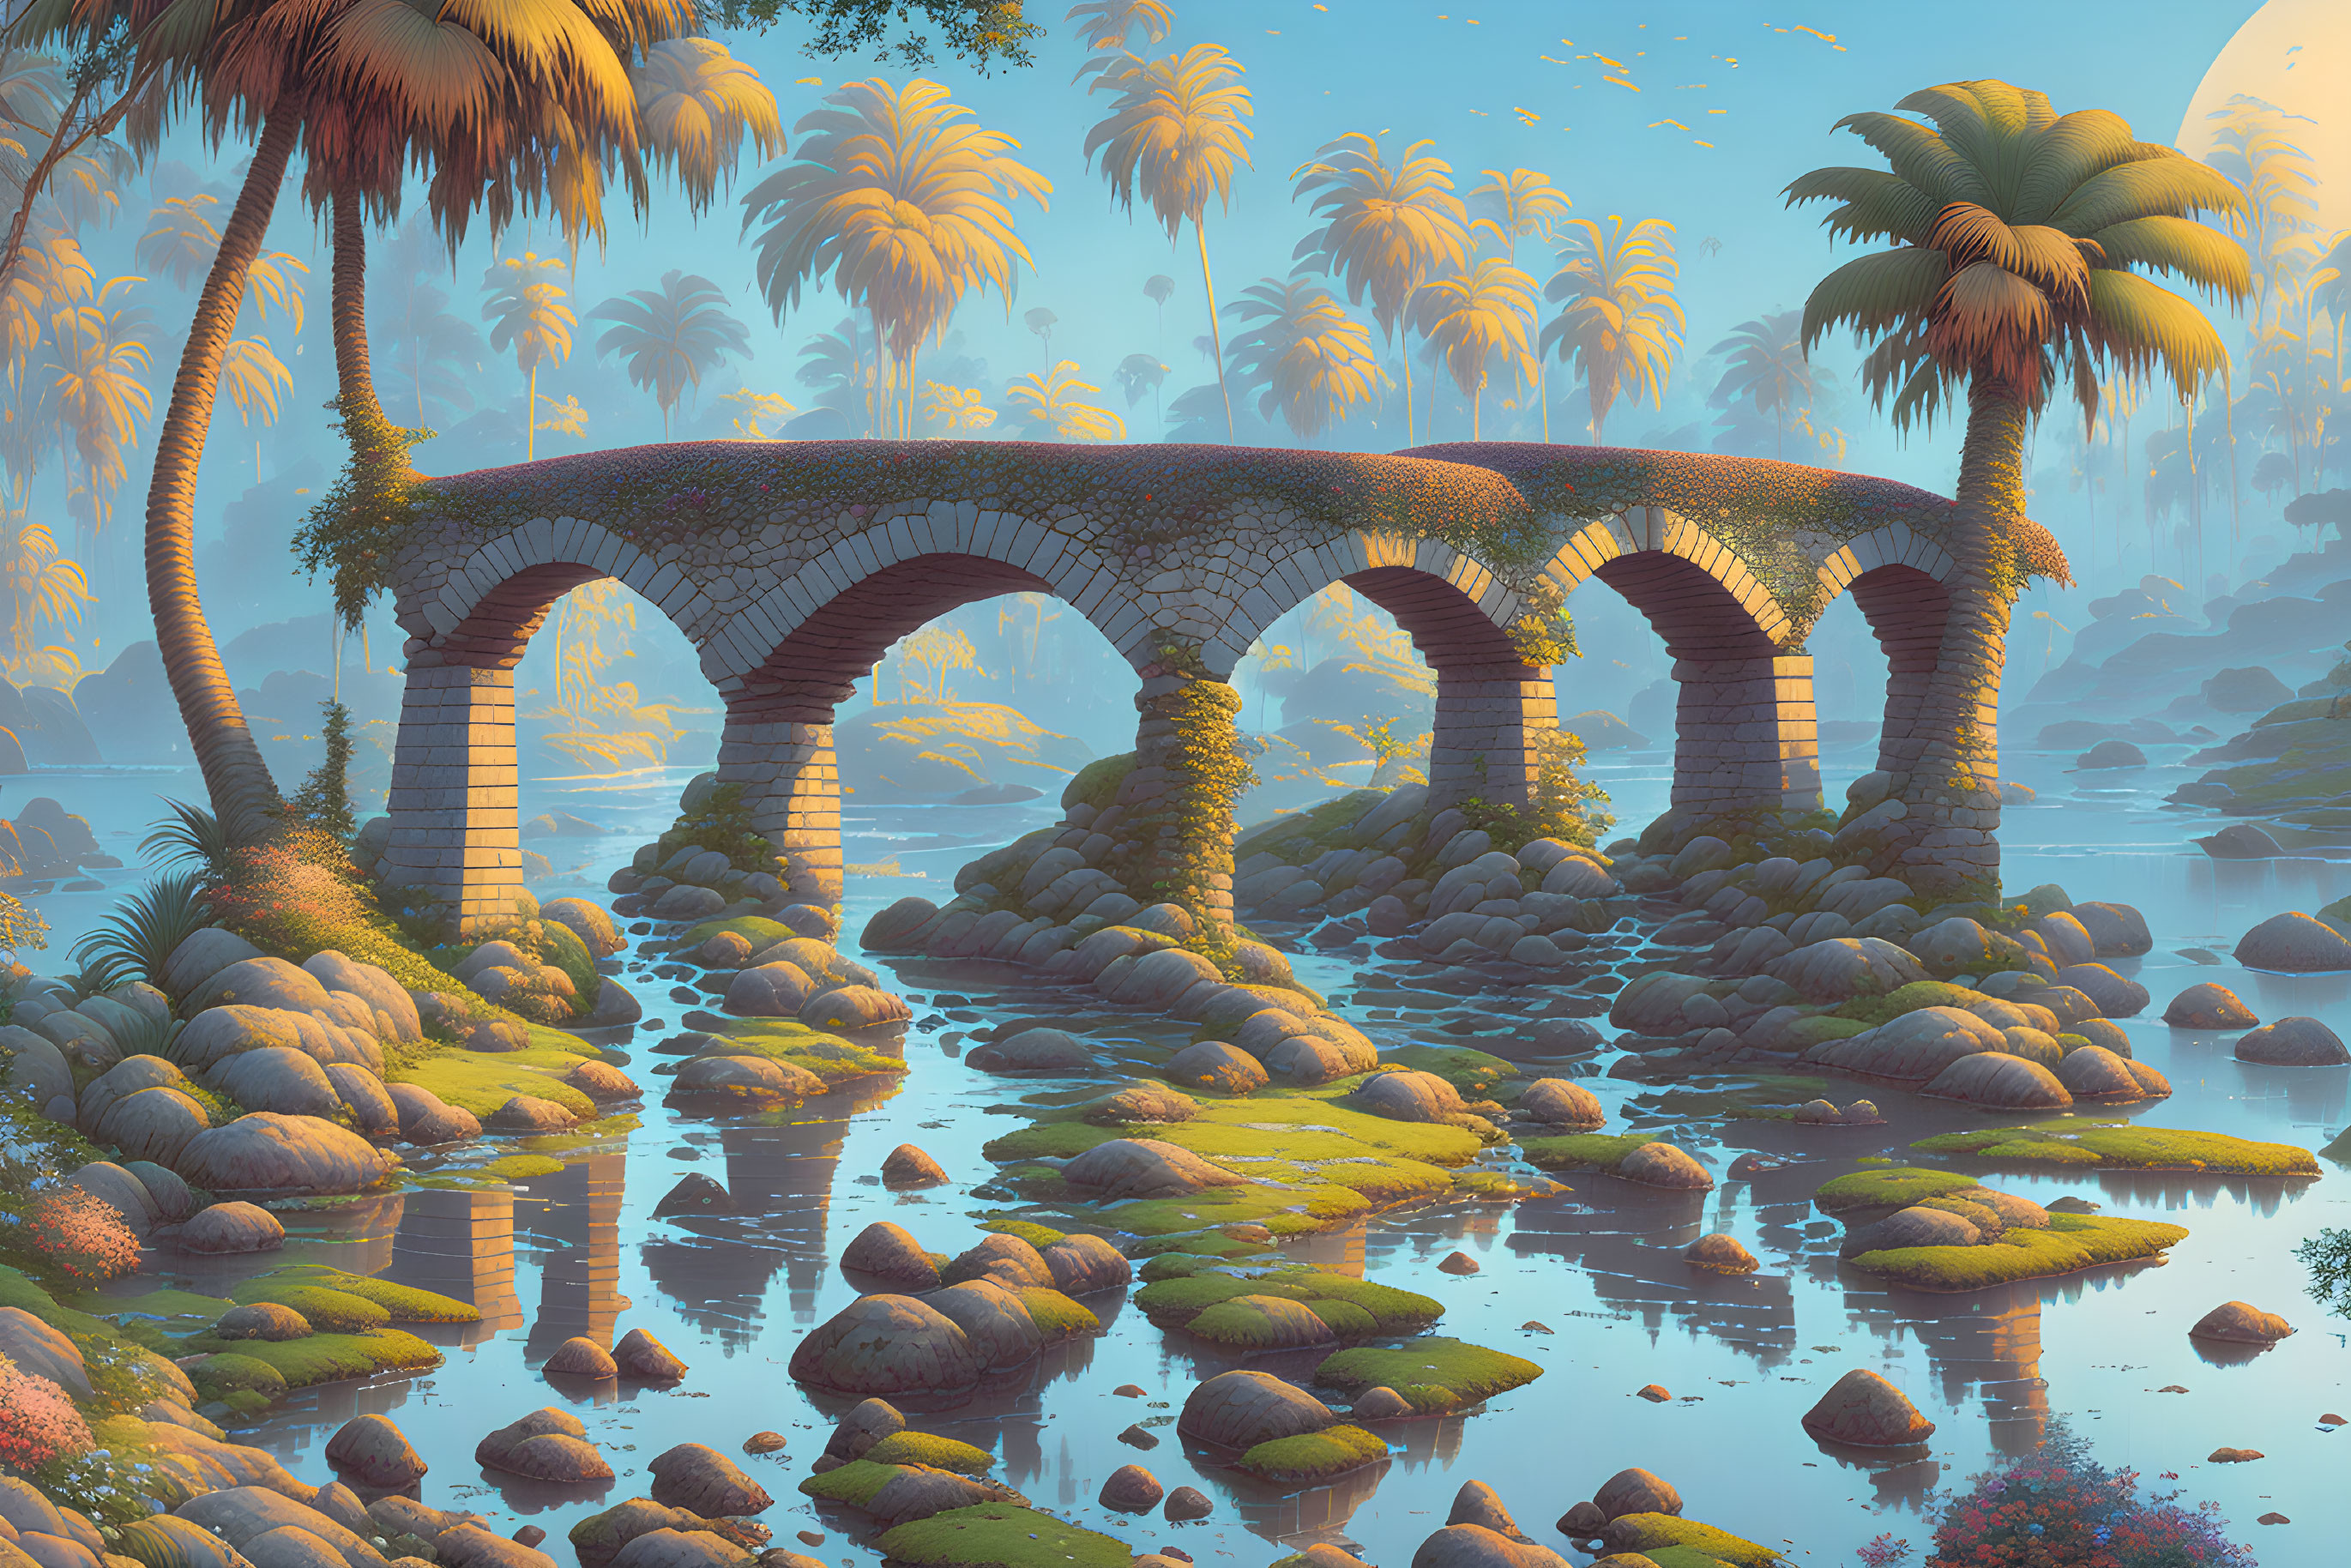 Stone arch bridge over tropical river at dawn or dusk